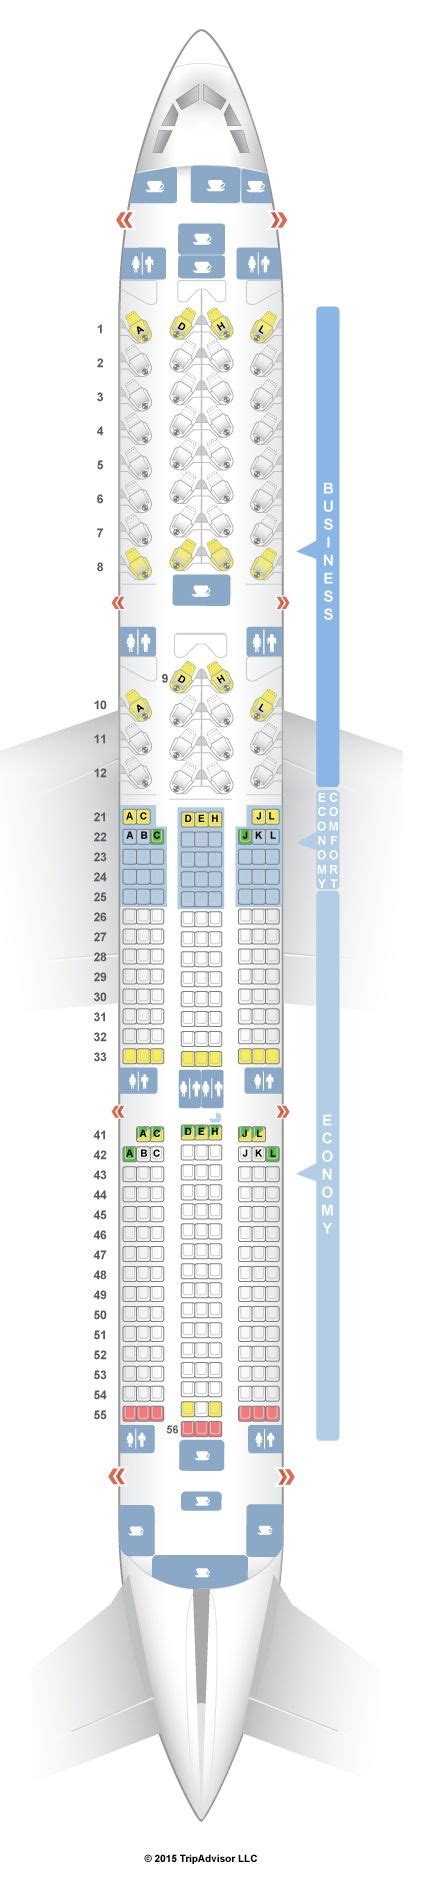 SeatGuru Seat Map Finnair Airbus A350 900 350 Seatguru Airbus Map